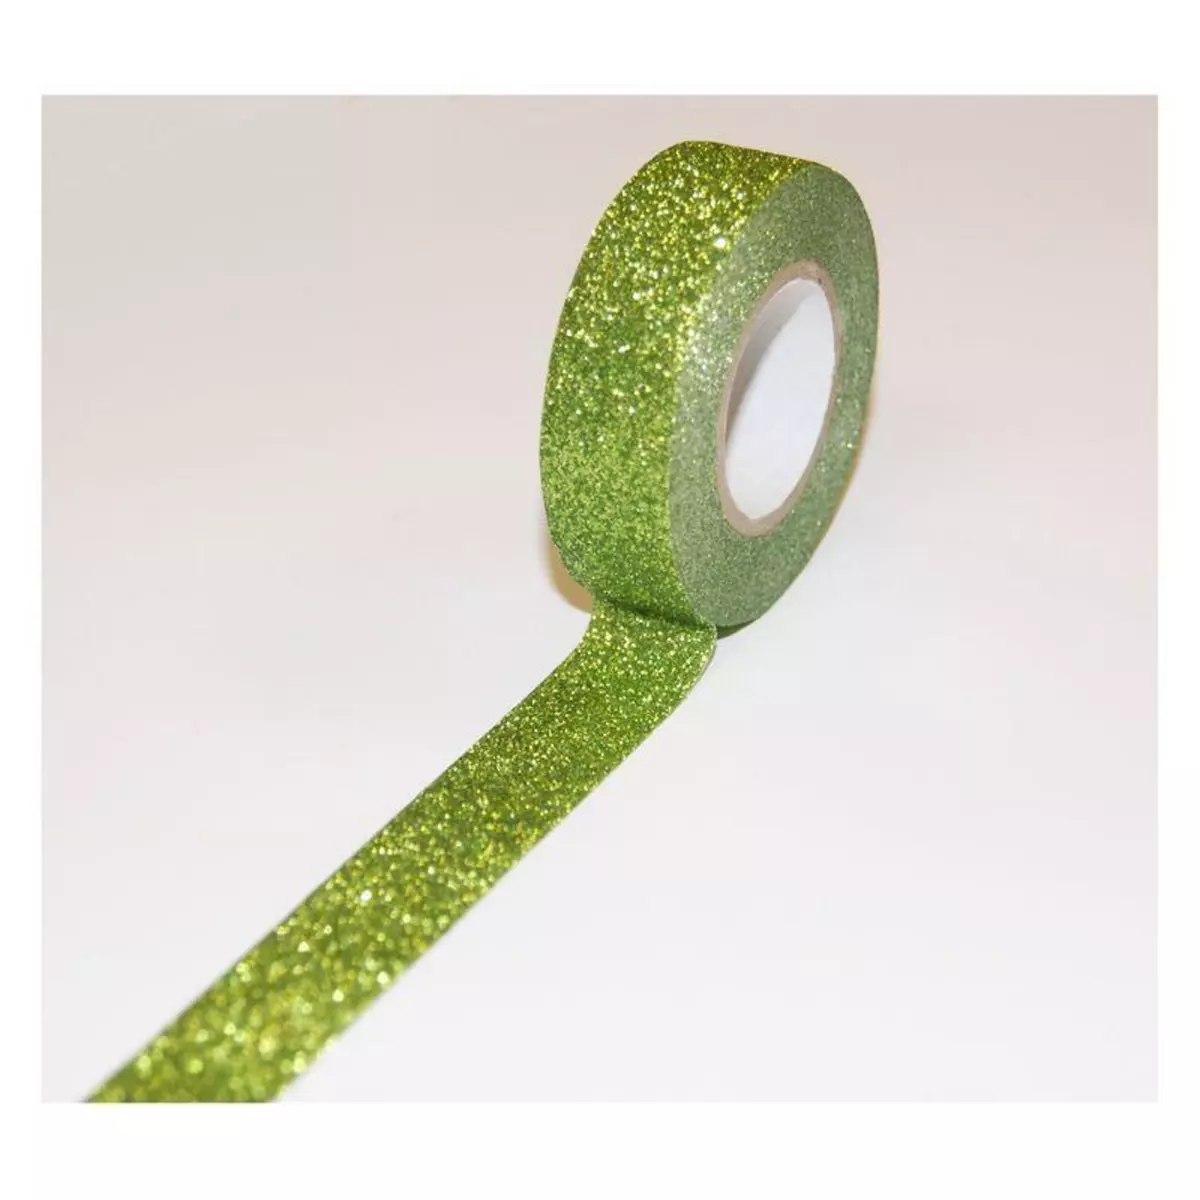  Masking tape - Vert - Paillettes - Repositionnable - 15 mm x 10 m